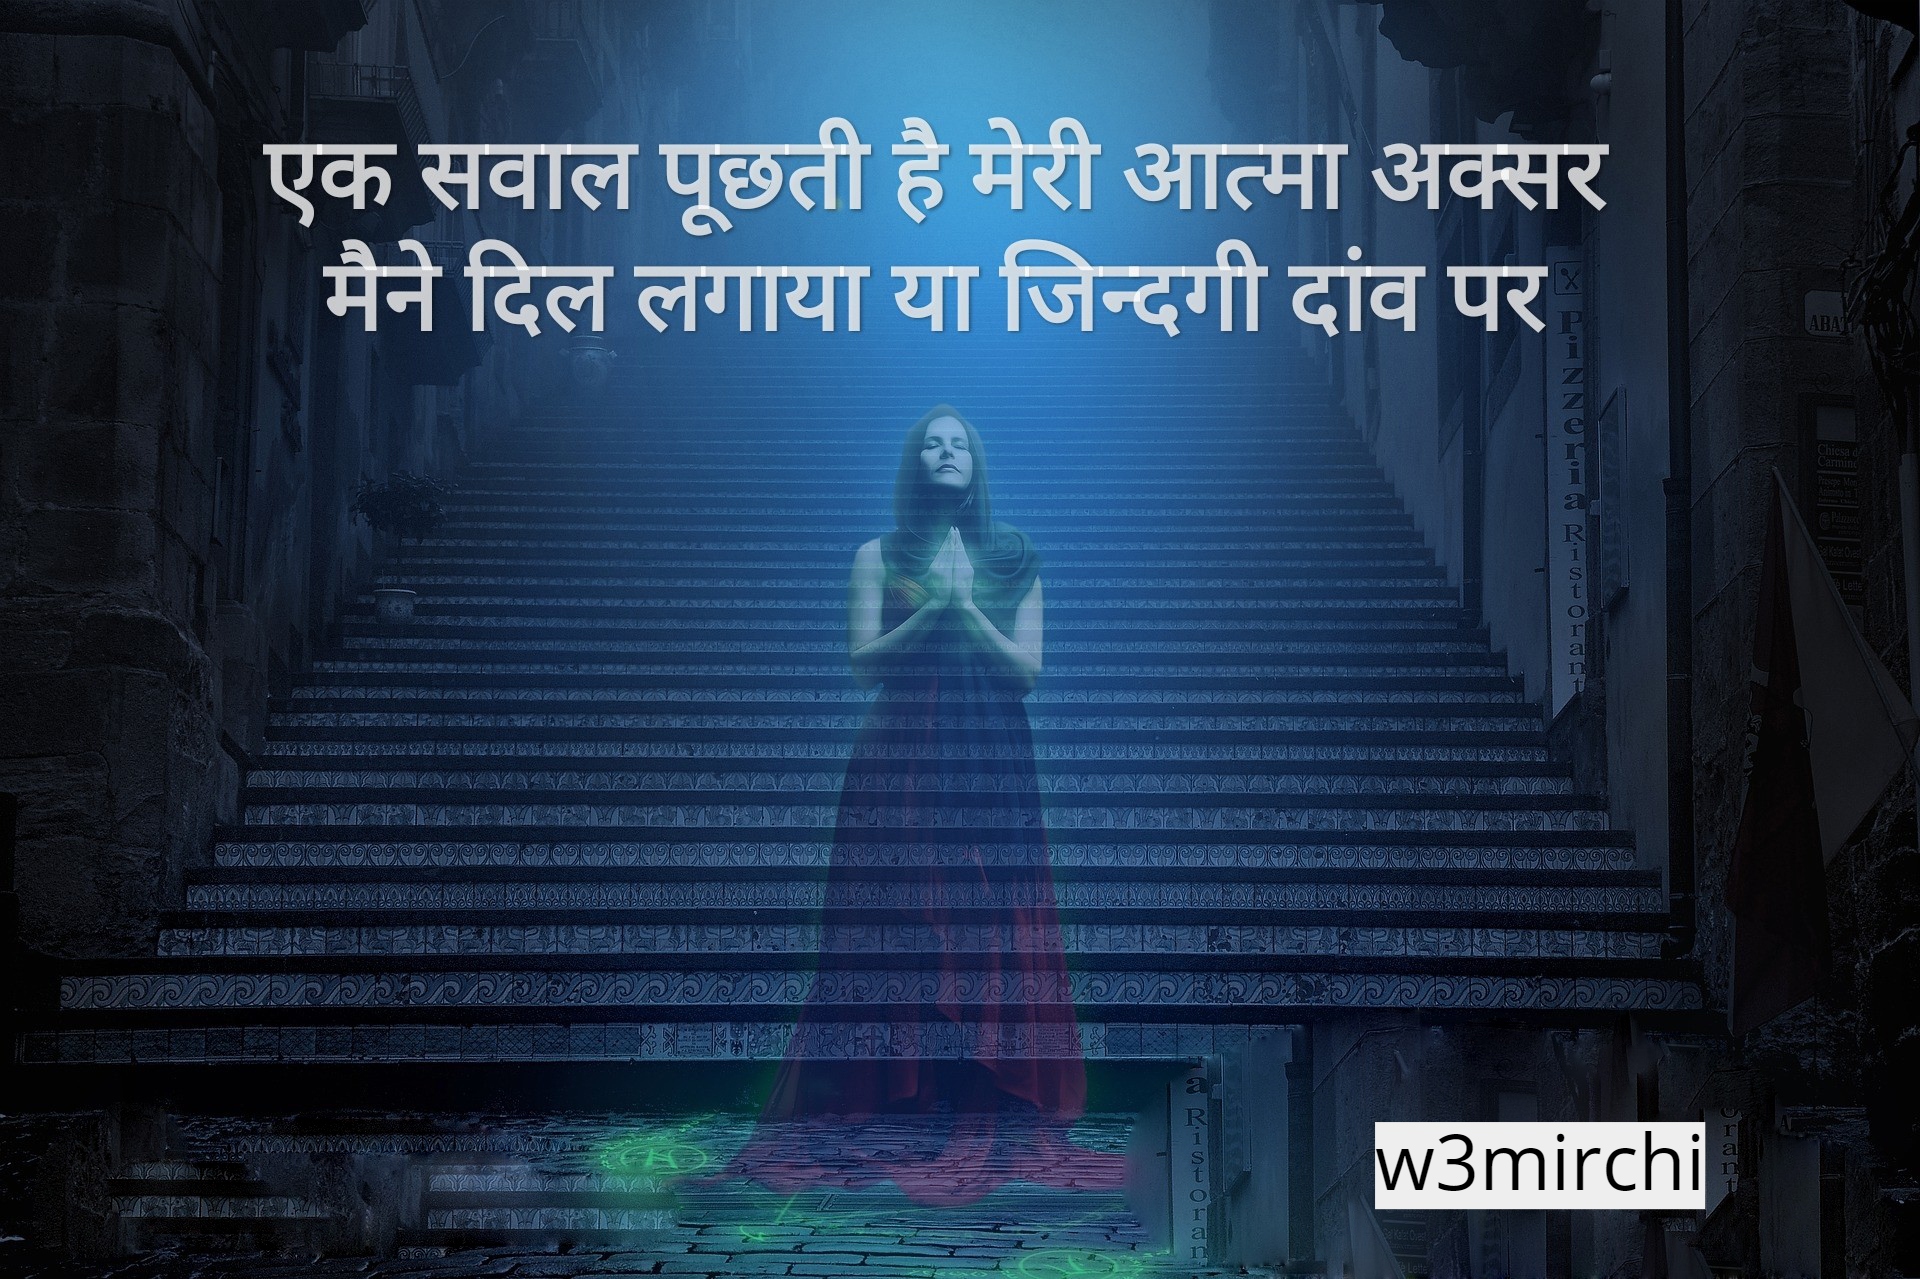 Aatma Shayari आत्मा शायरी एक सवाल पूछती है मेरी आत्मा अक्सर,